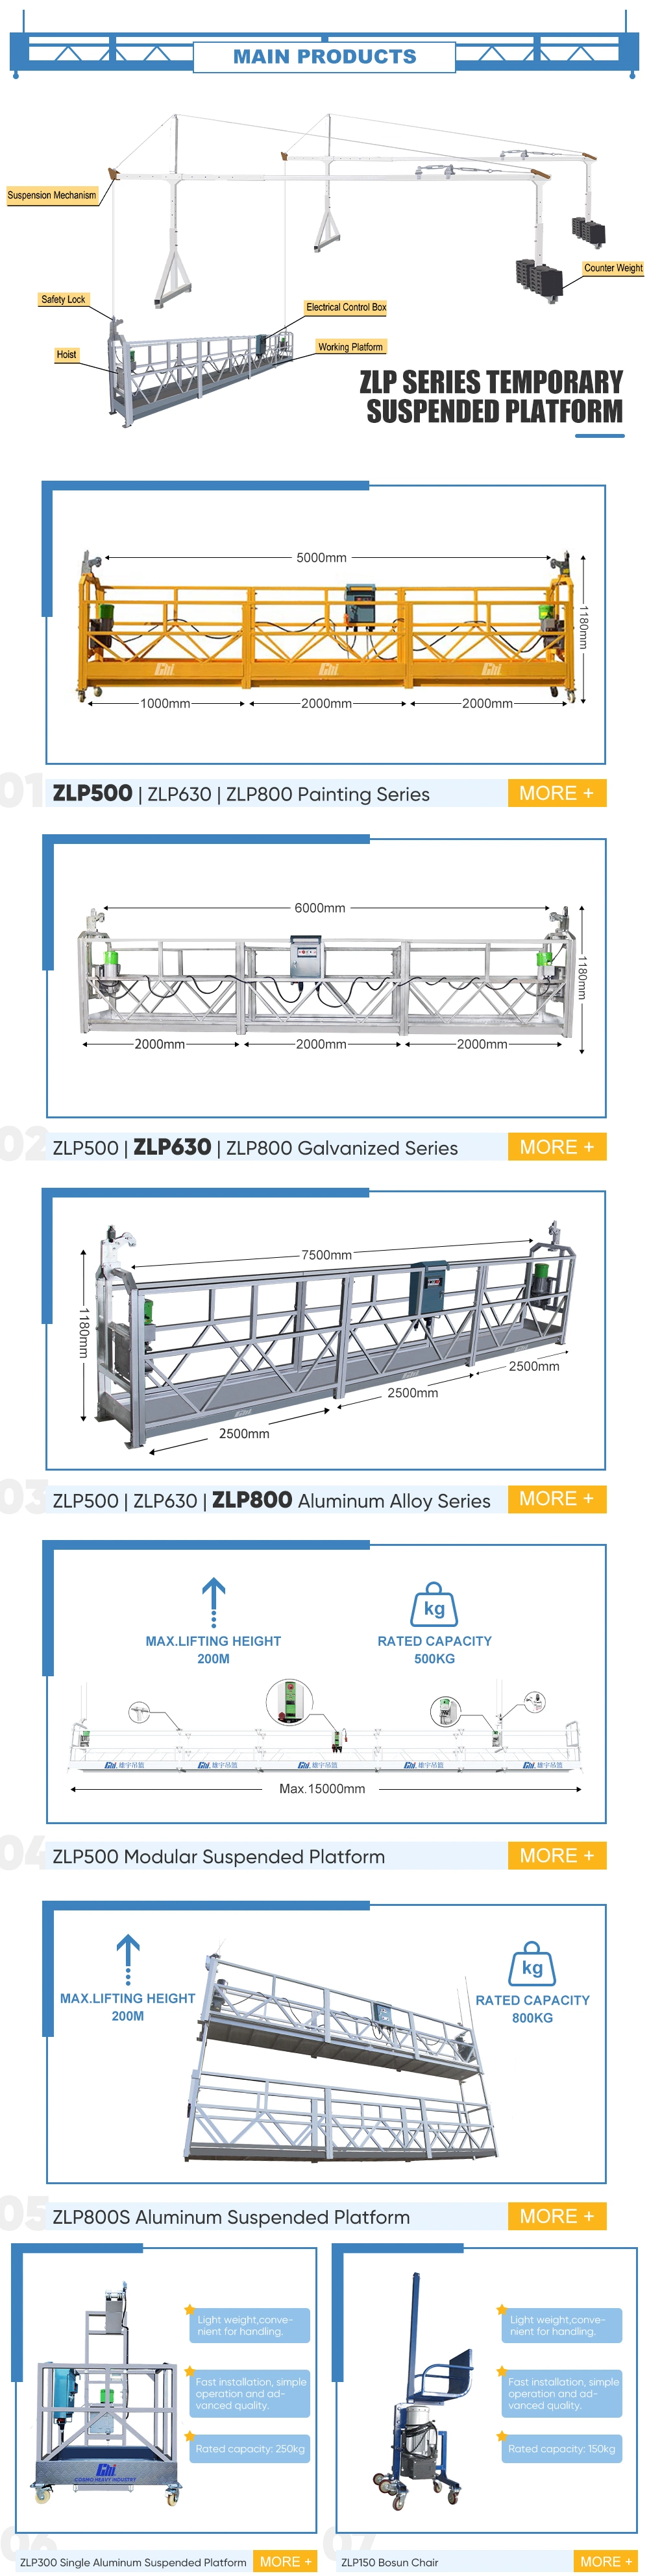 Zlp630 Aluminum Alloy Suspended Platform